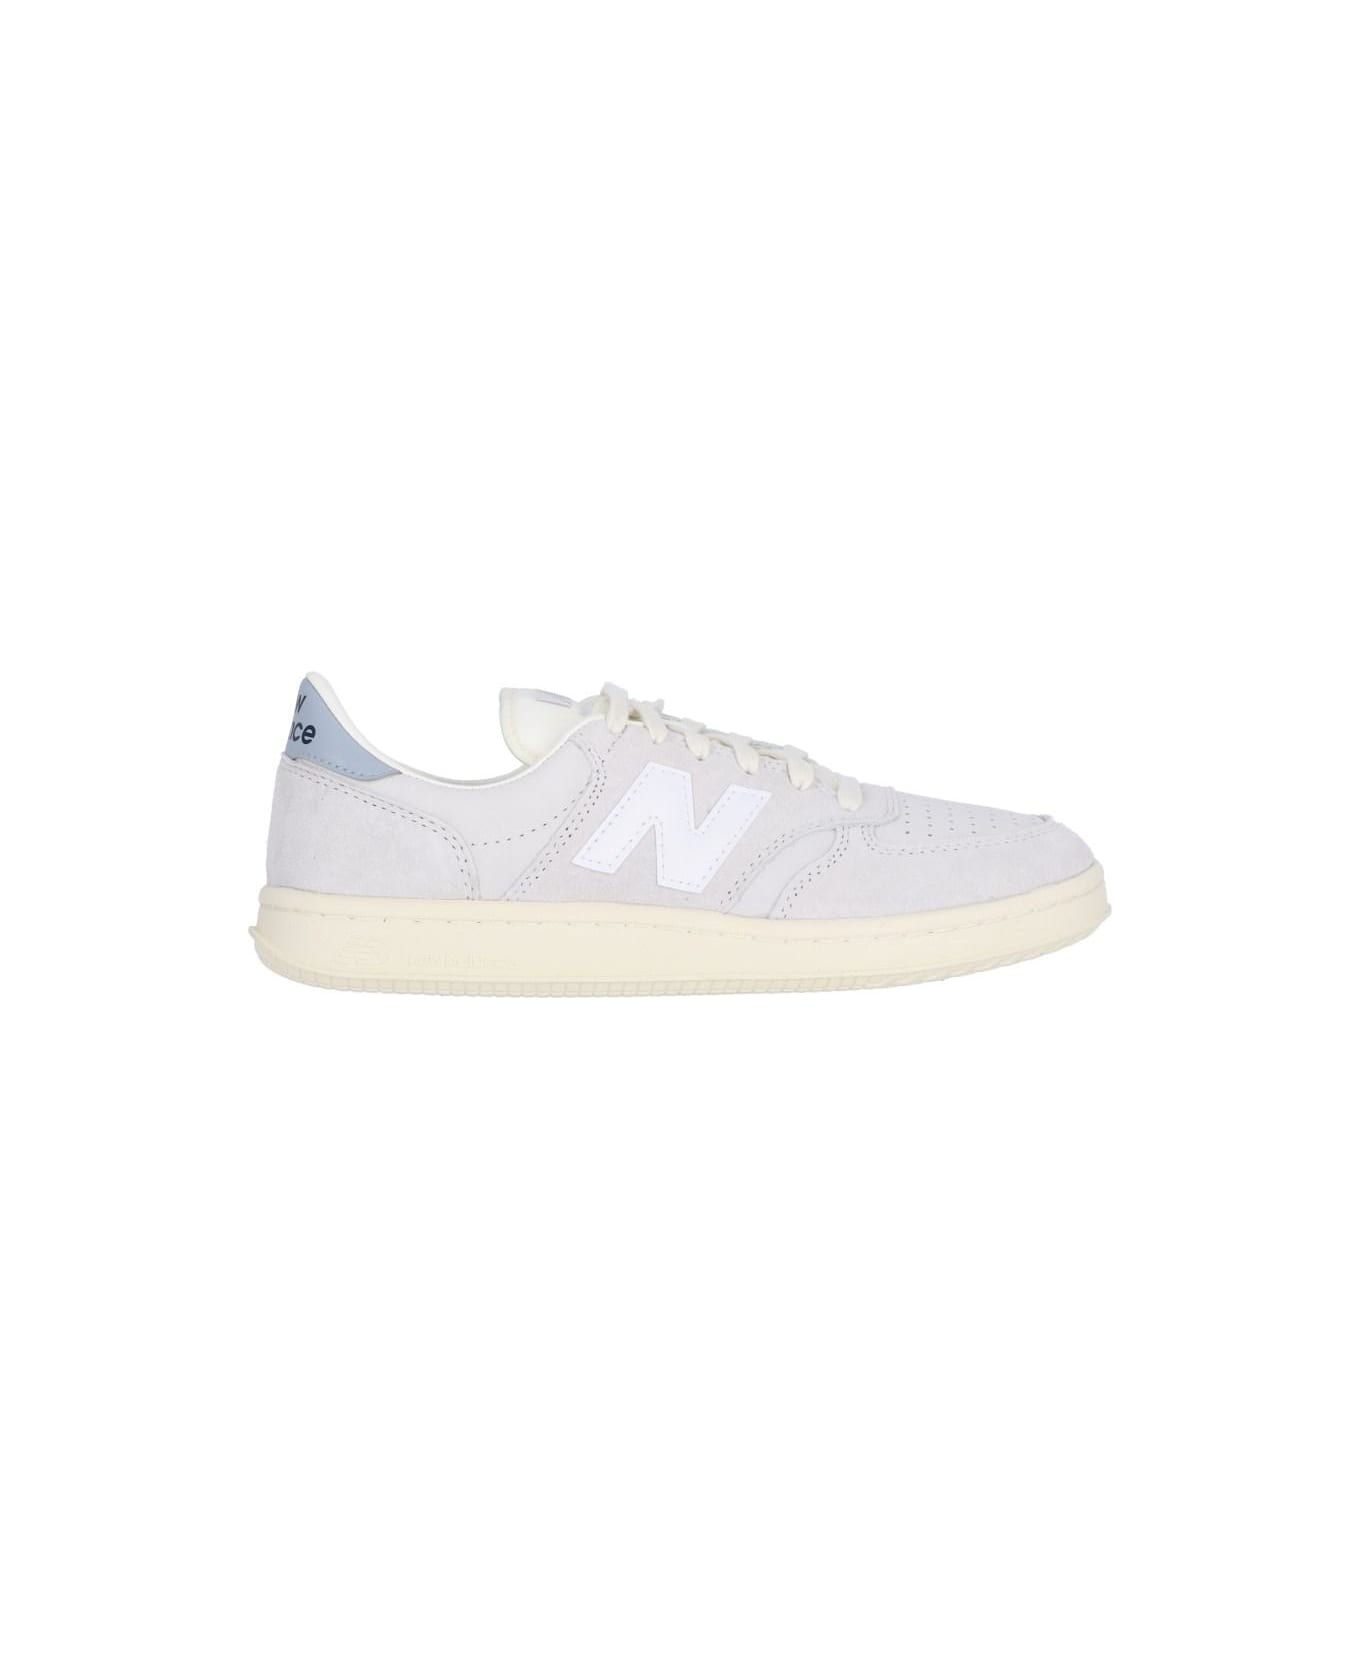 New Balance 't500' Sneakers - White スニーカー